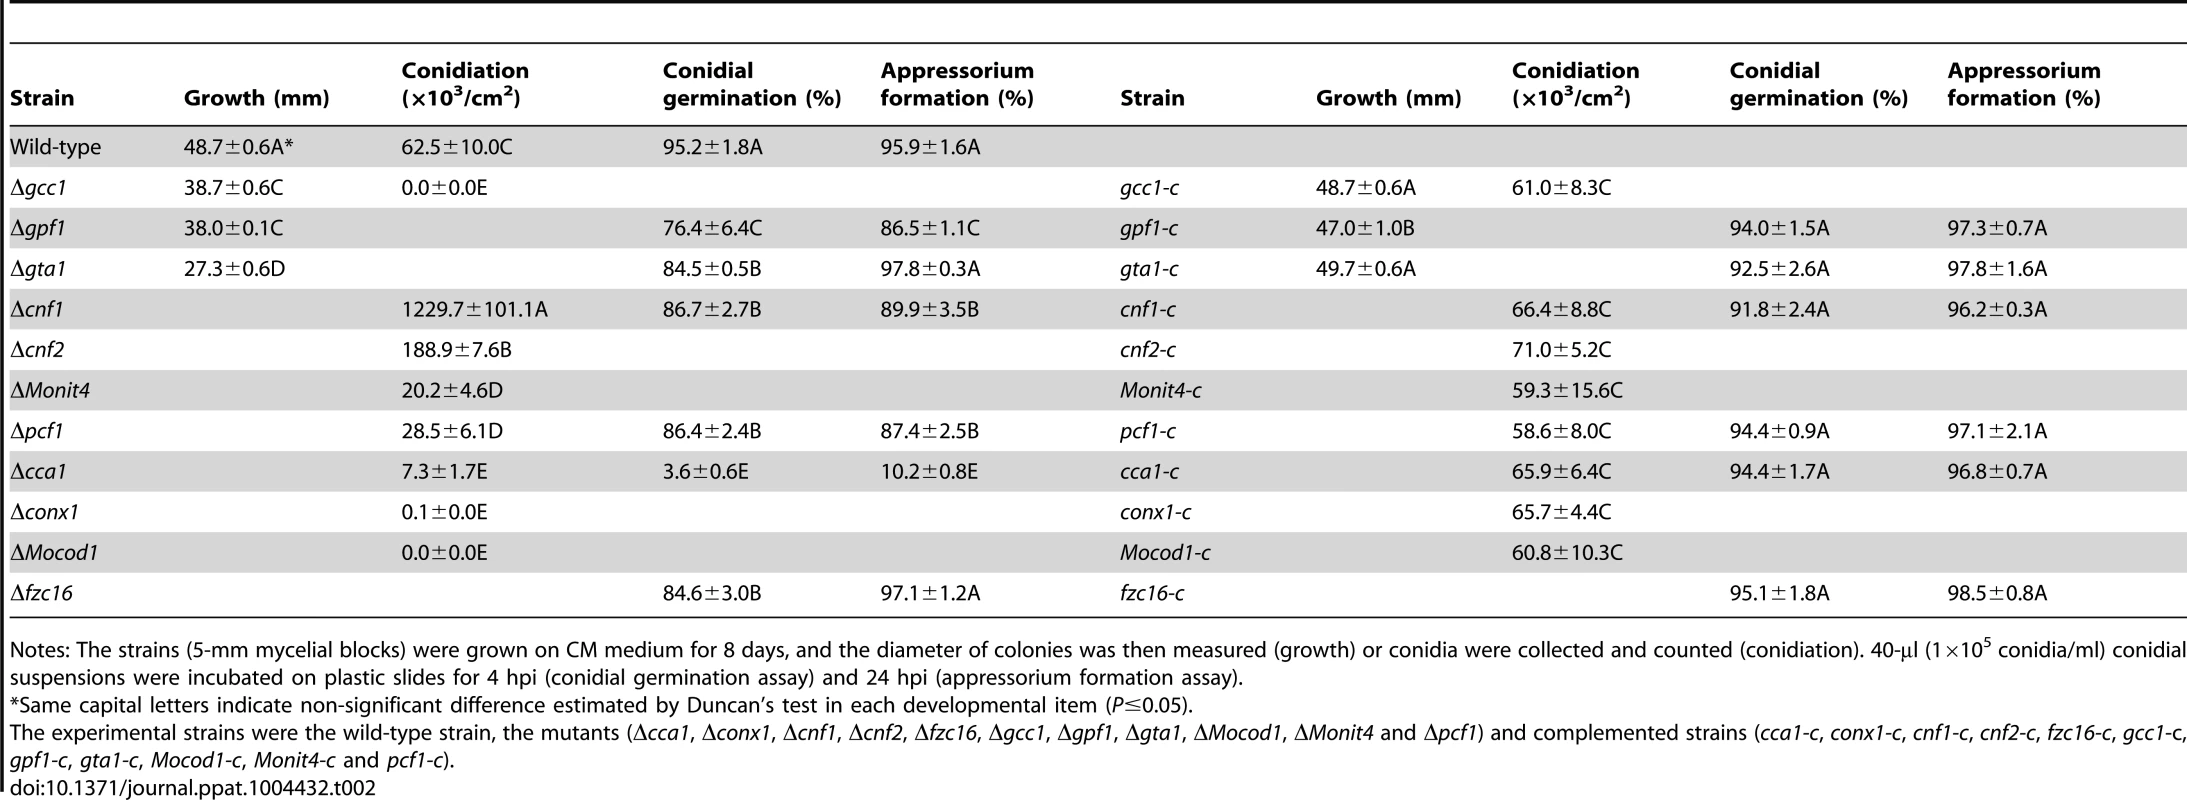 Developmental characteristics of <i>M. oryzae</i> strains.